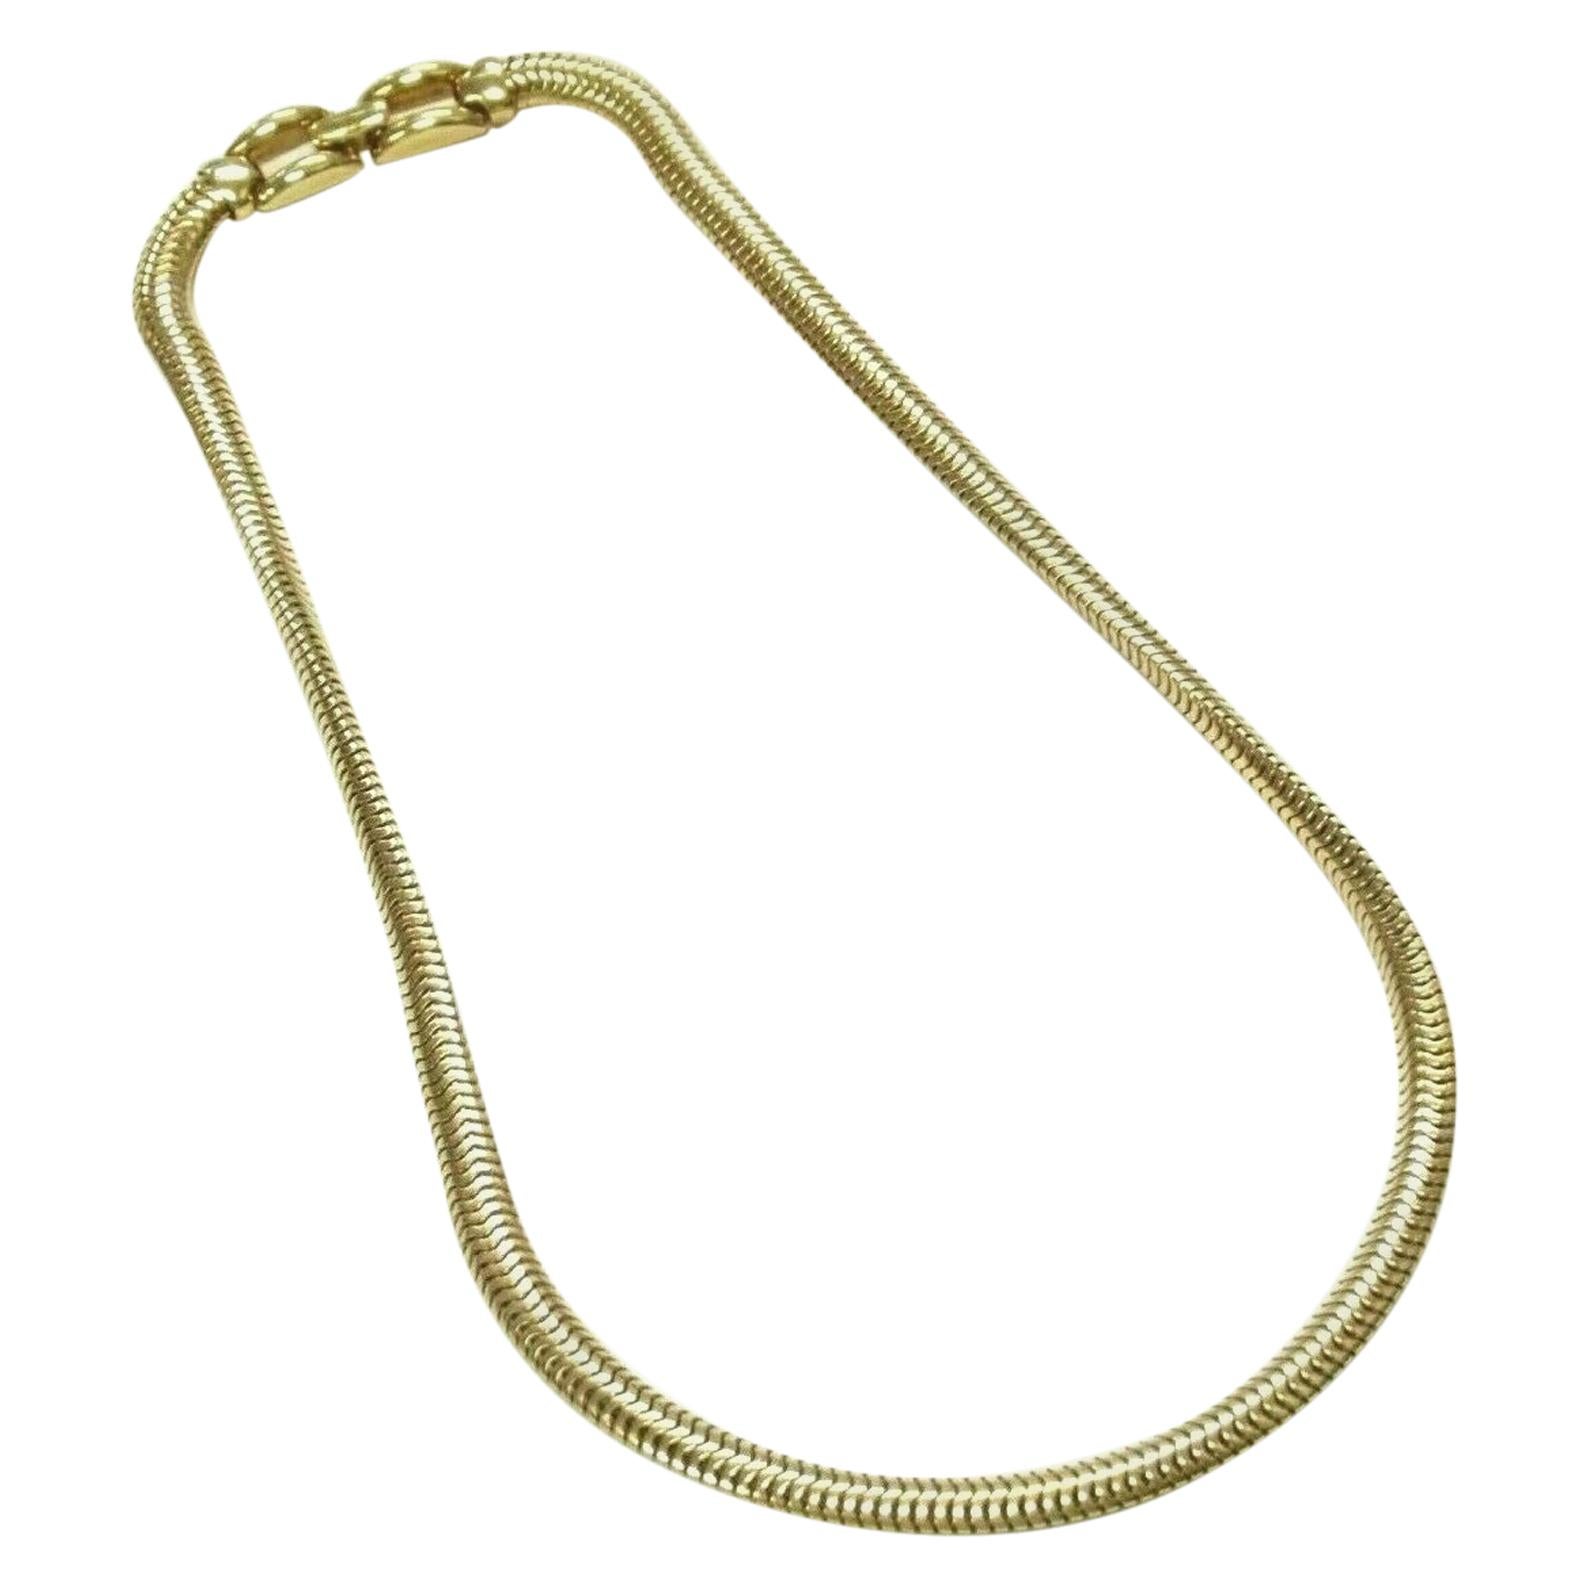 Tiffany & Co. Retro 14 Karat Yellow Gold Snake Chain Necklace, circa 1940s